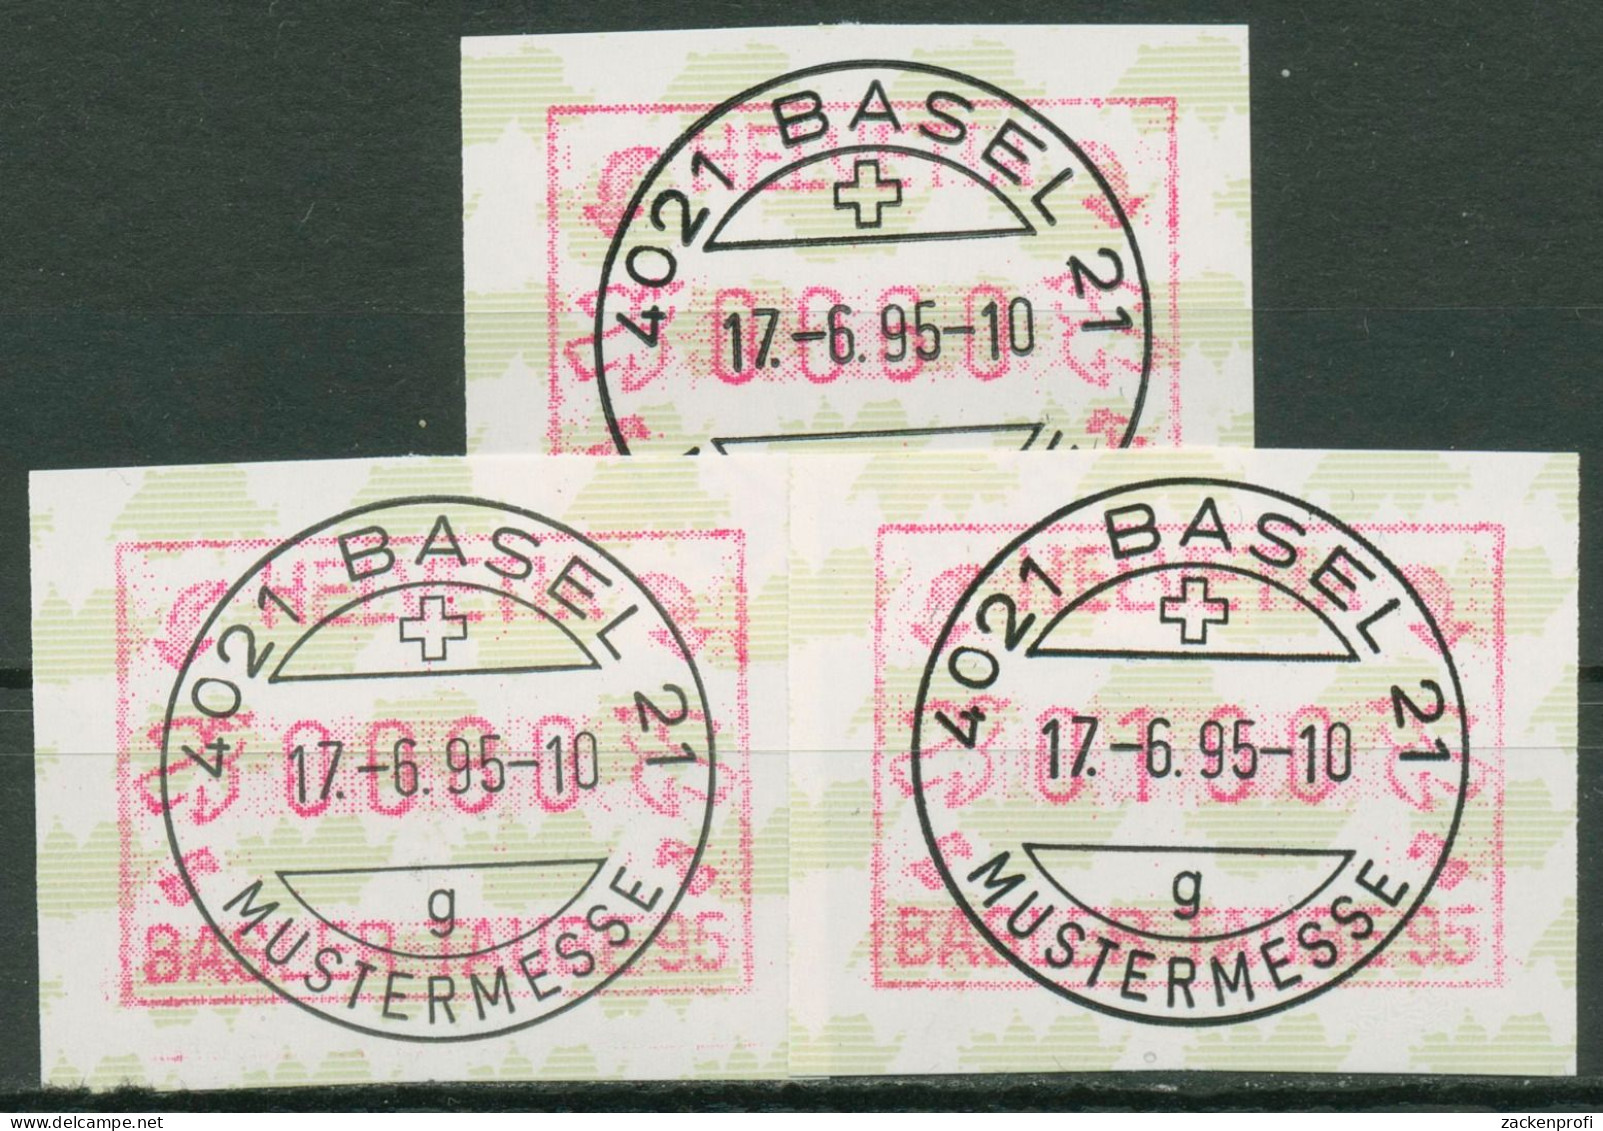 Schweiz Automatenmarken 1995 Basler Taube ATM 6 S 1 Gestempelt - Timbres D'automates